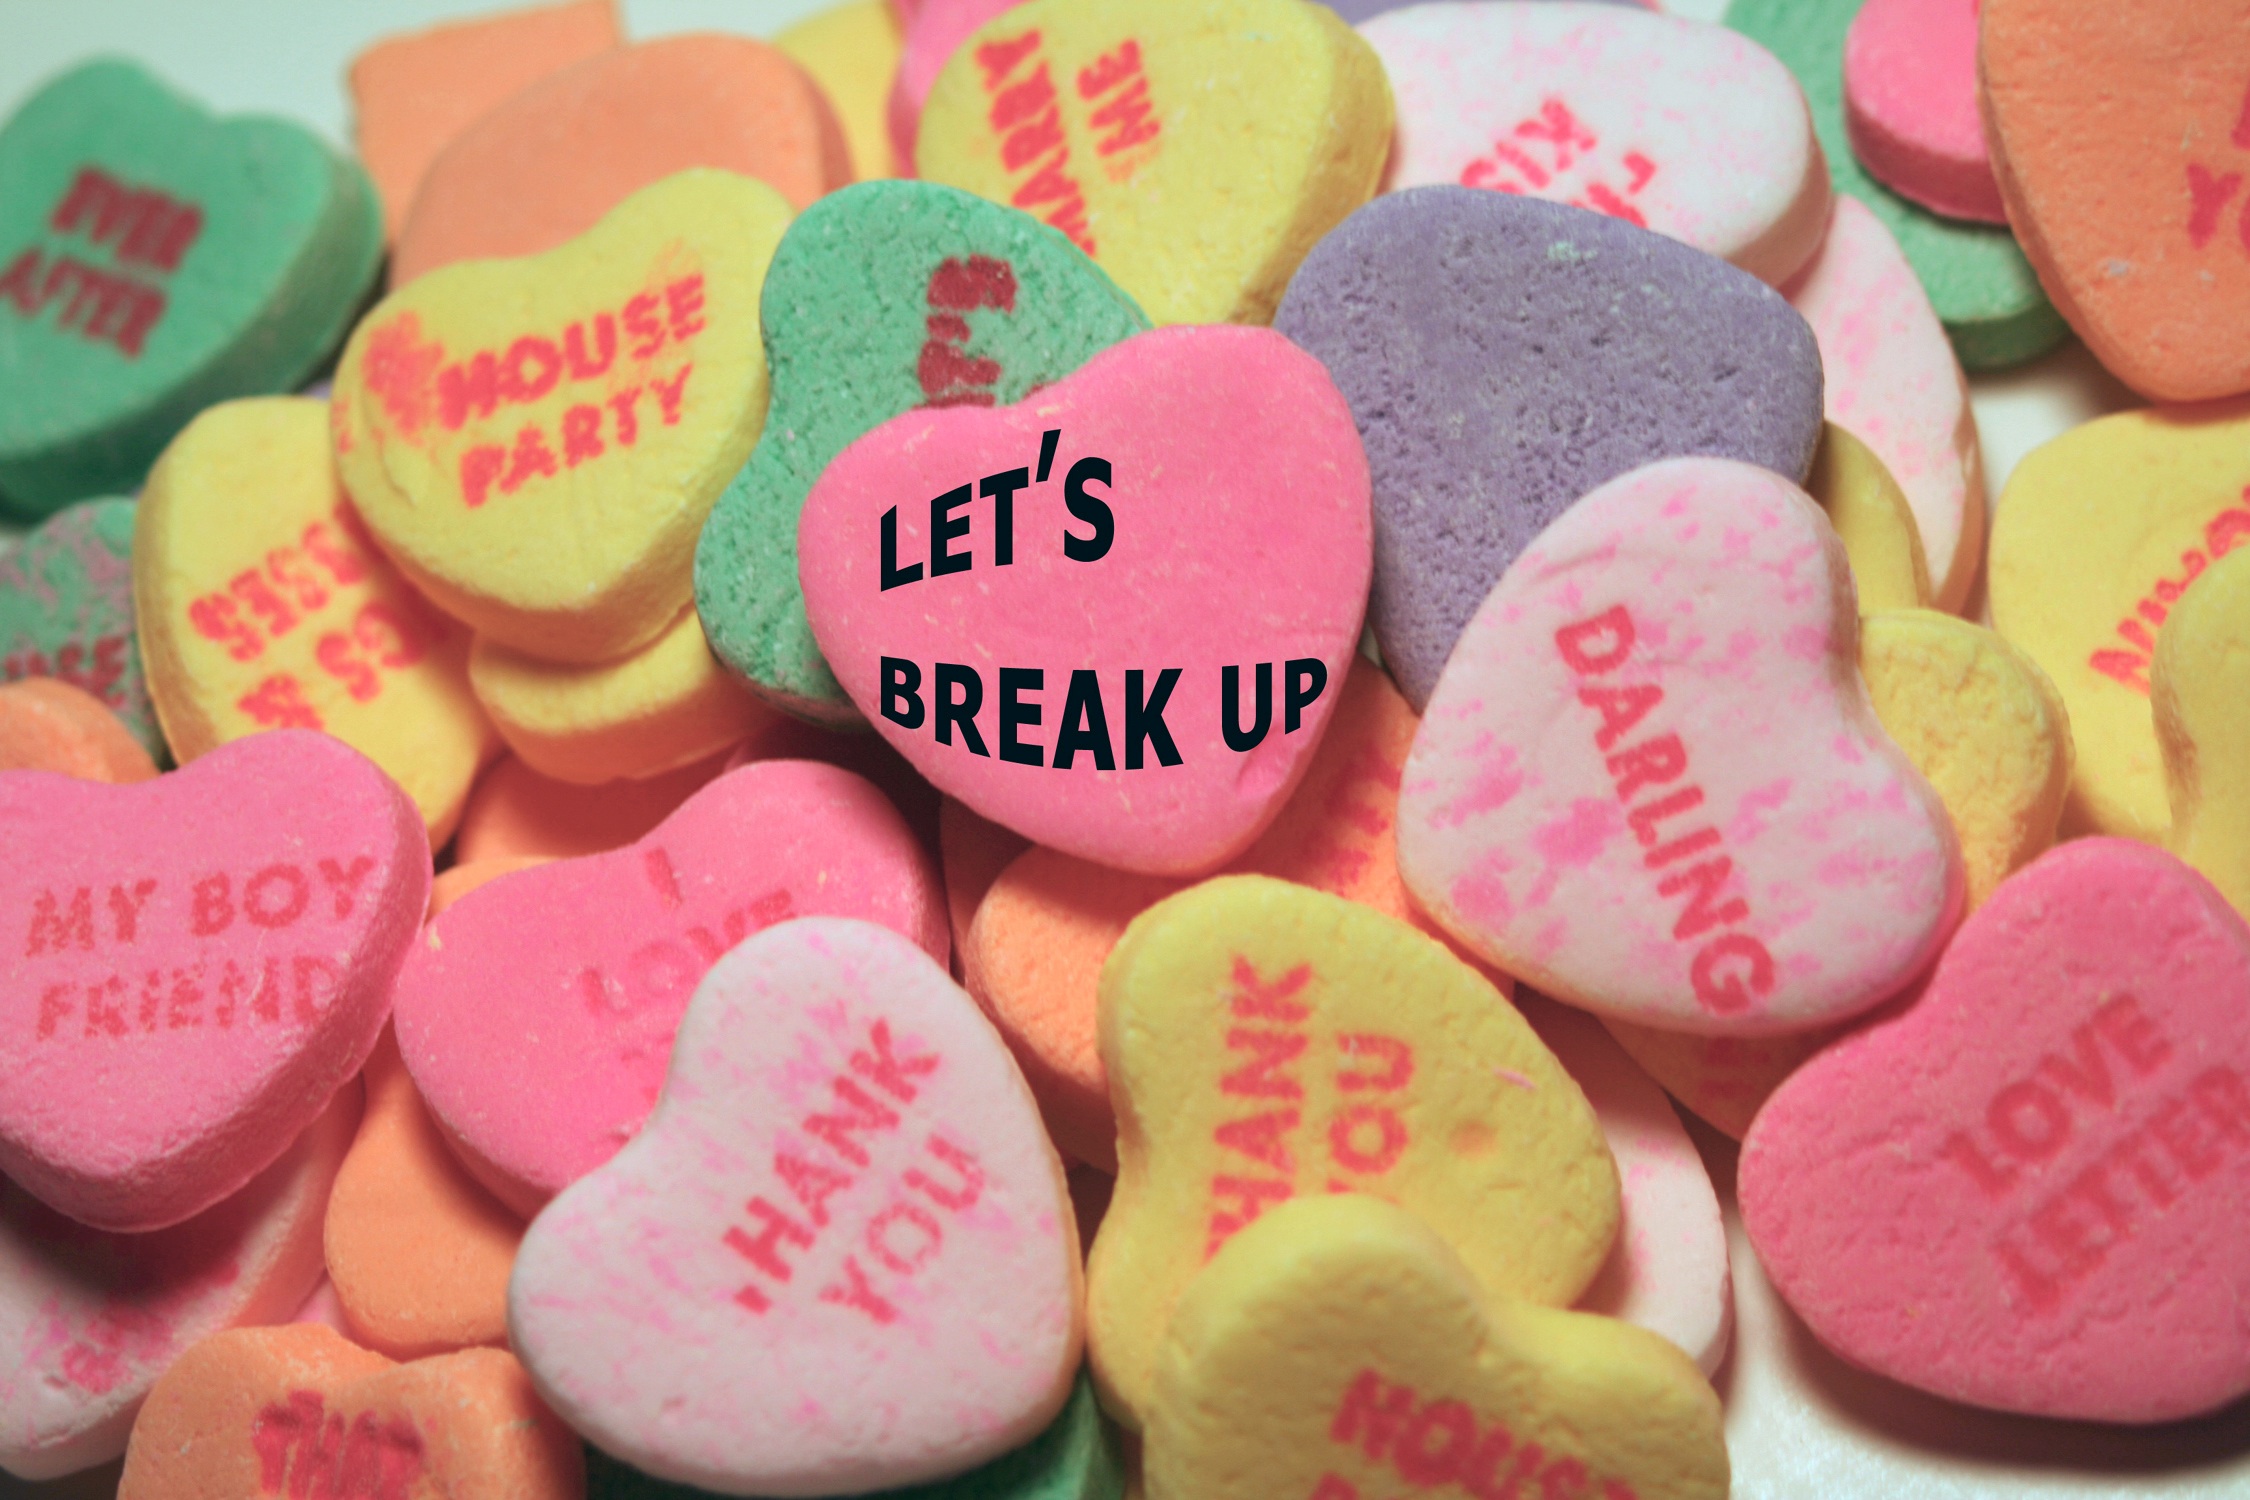 http://thesource.com/wp-content/uploads/2014/02/breakup-heart.jpg